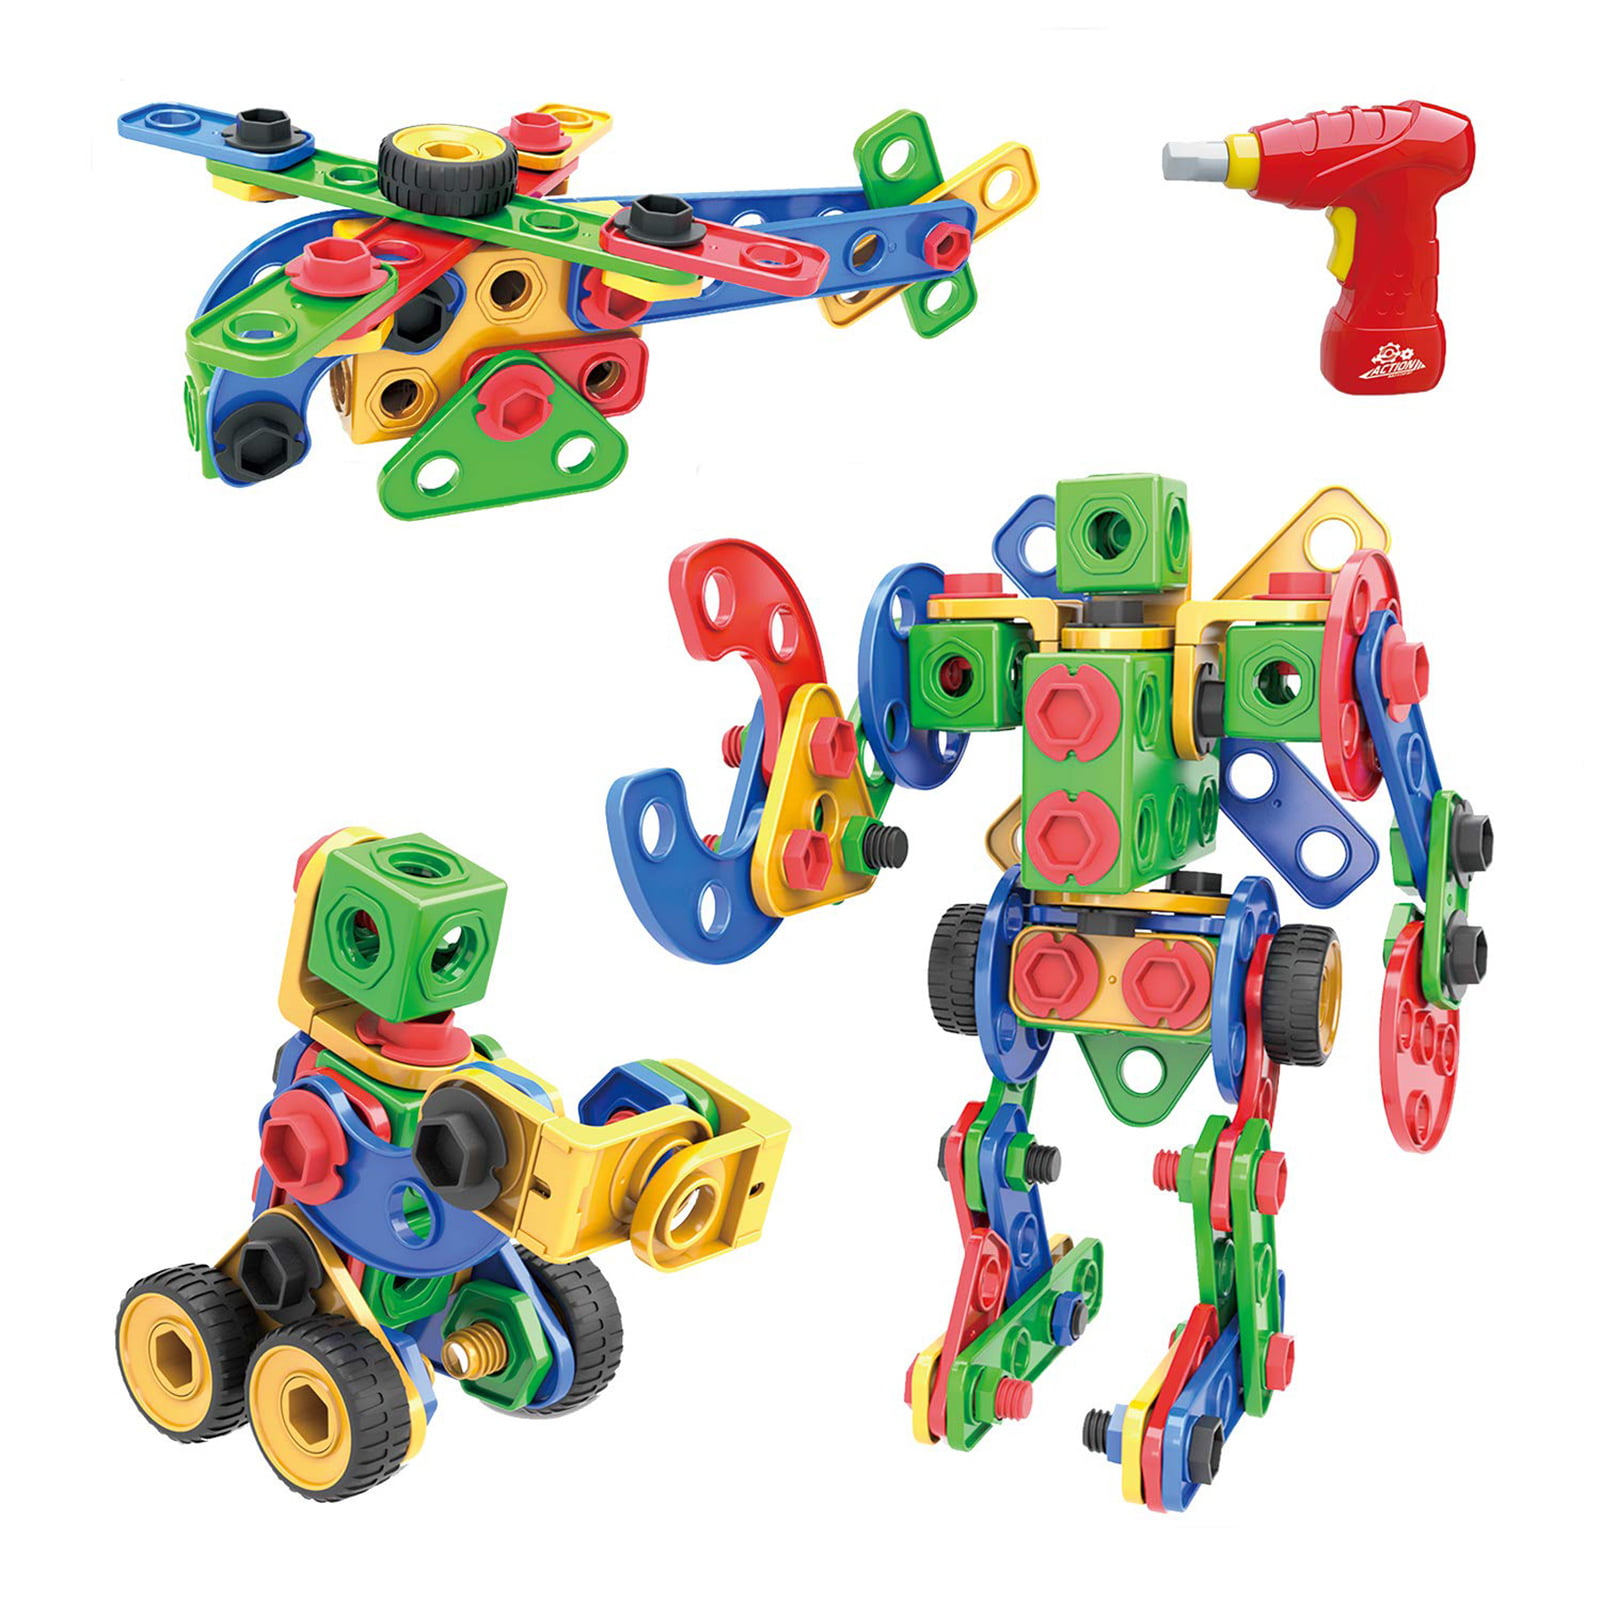 Details about   Interlocking Puzzle Building Blocks STEM Construction Toy for Kids 